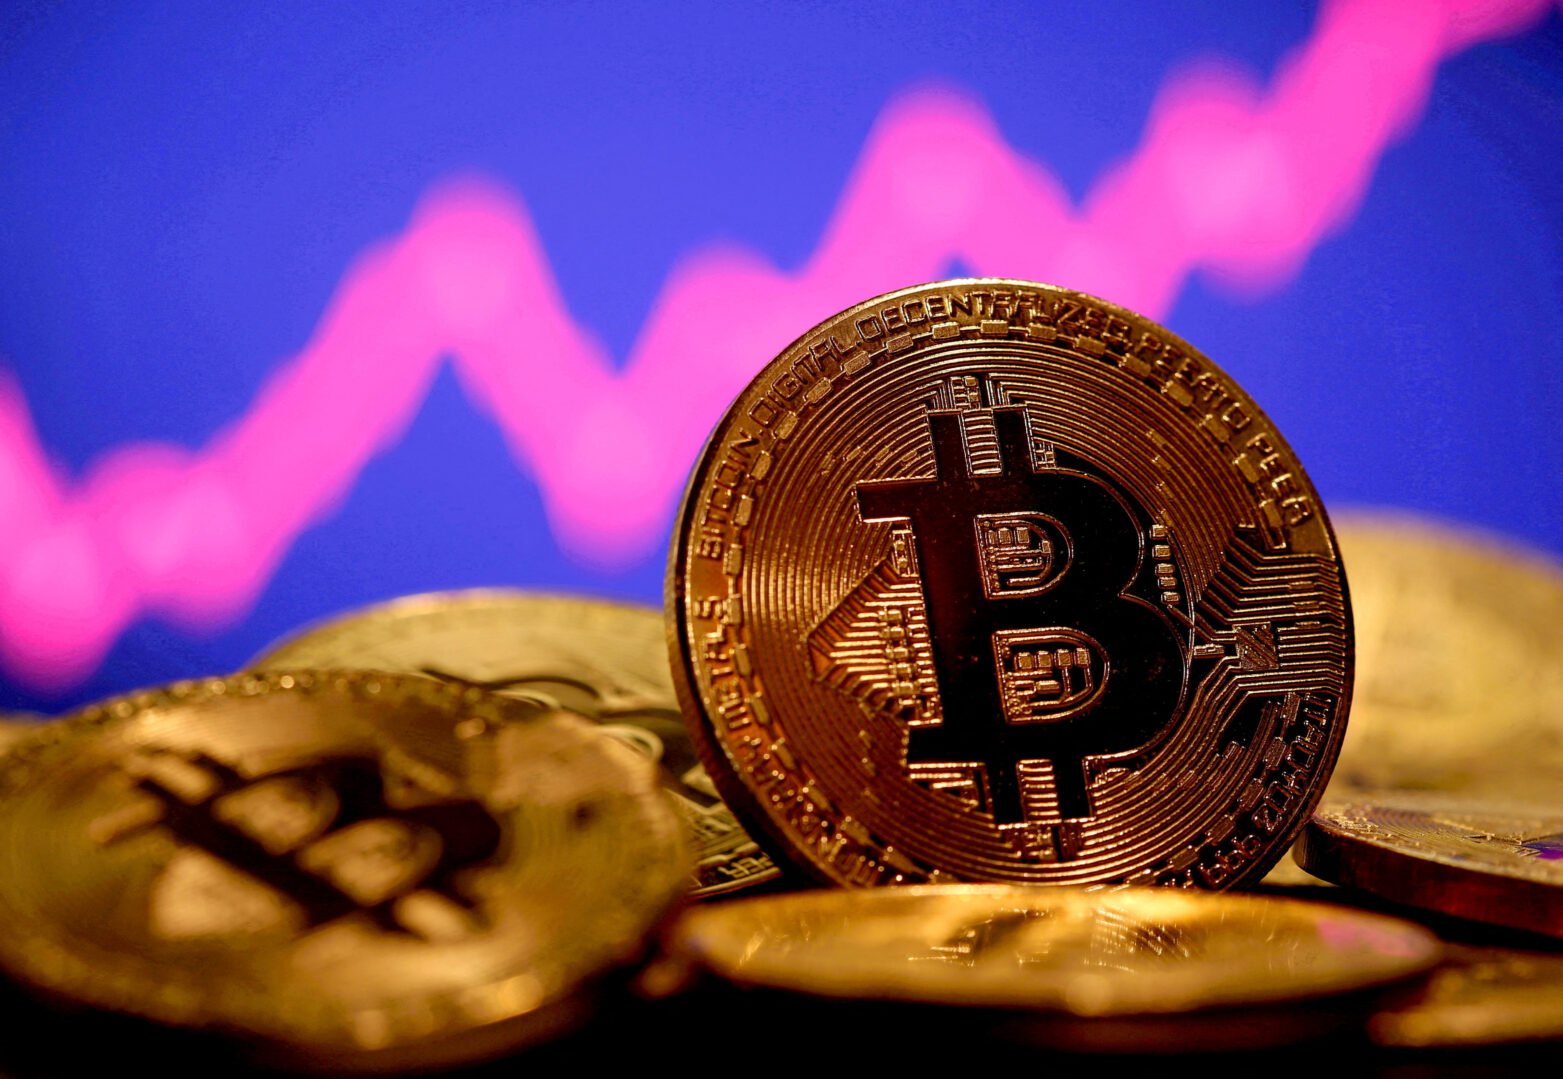 CBDCs can destroy the value of Bitcoin, according to Ted Cruz.